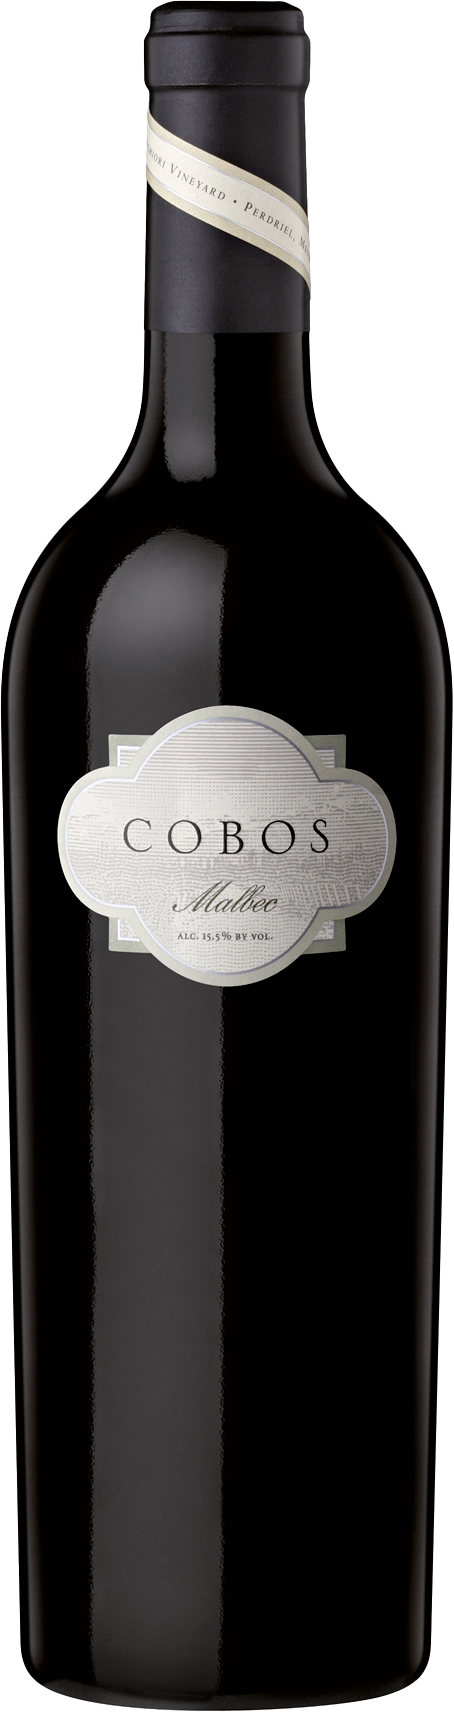 Köstlichalkoholisches - Viña Cobos »Cobos« Marchiori Vineyard Malbec - Onlineshop Ludwig von Kapff